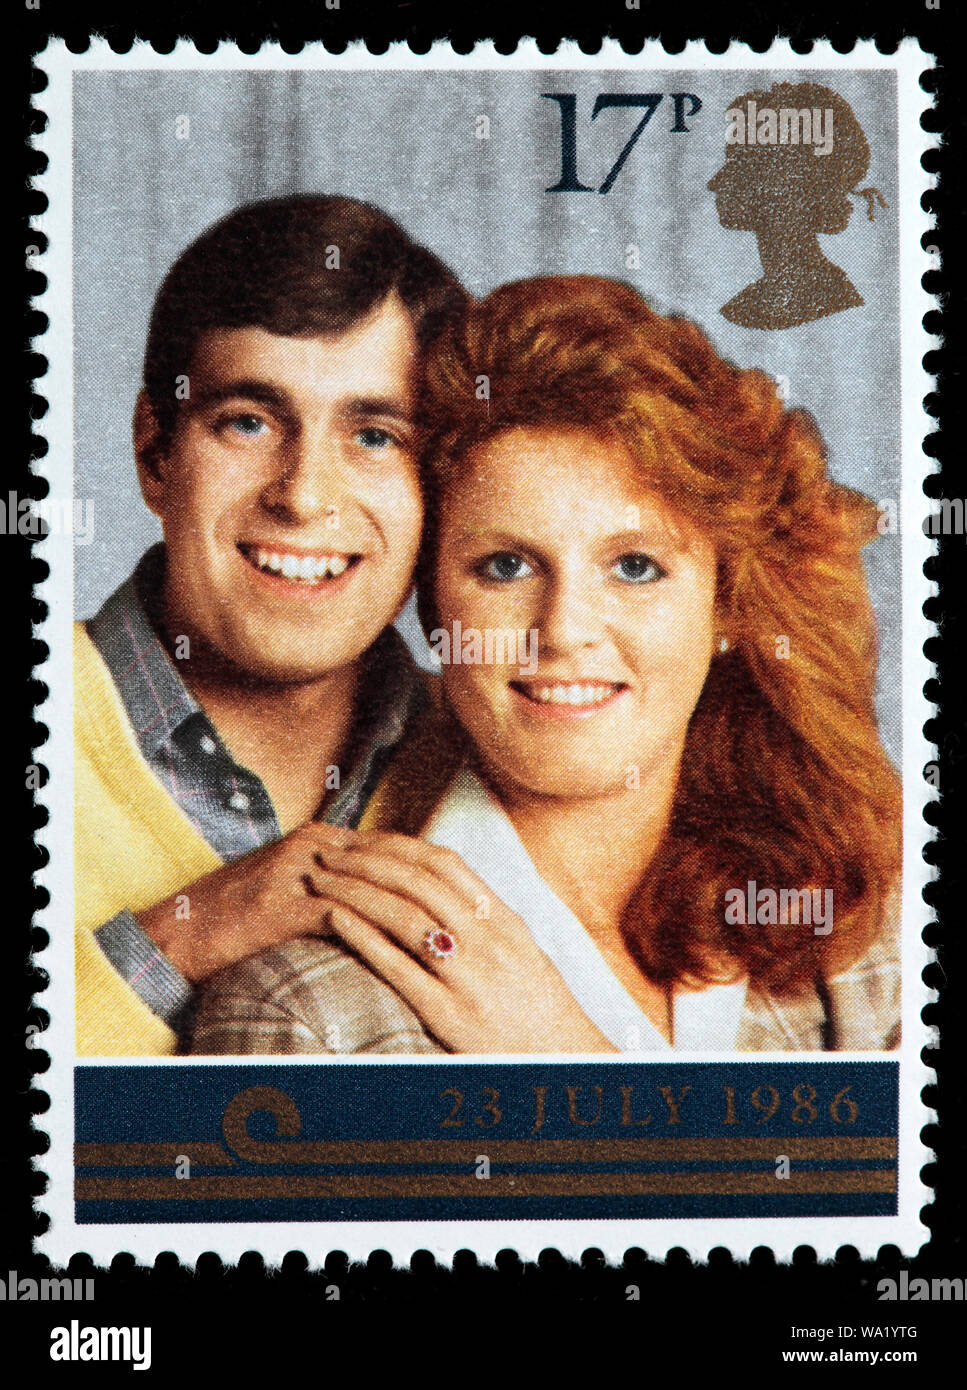 Prince Andrew and Sarah Ferguson, postage stamp, UK, 1986 Stock Photo